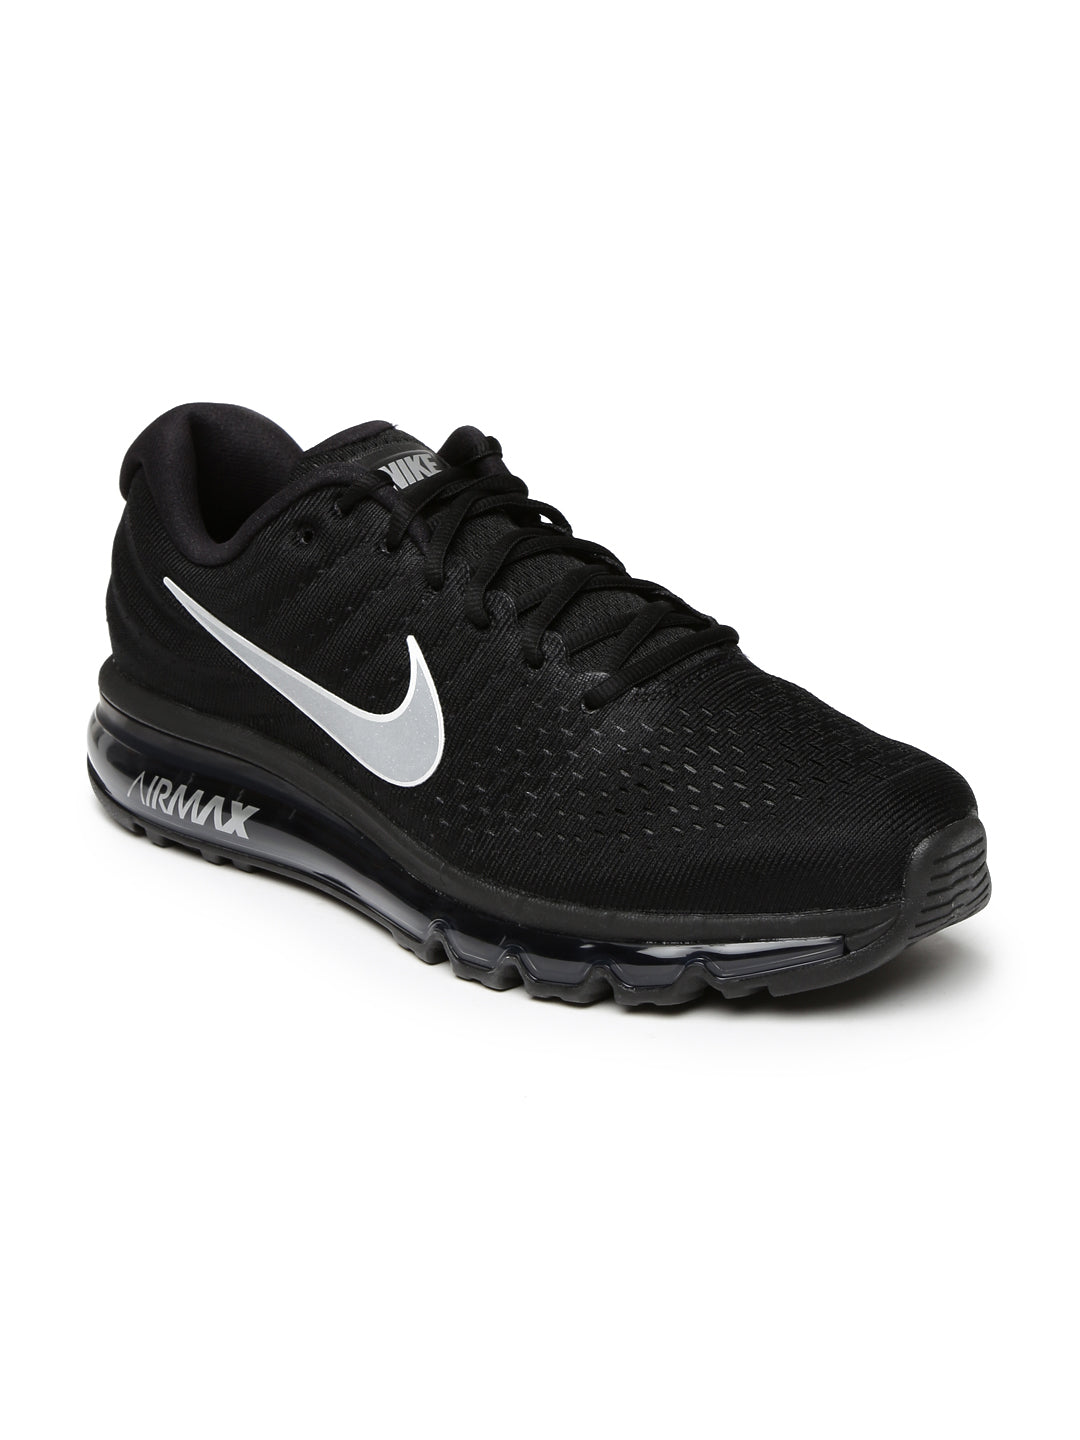 Nike Black Air Max Running Shoes 2017